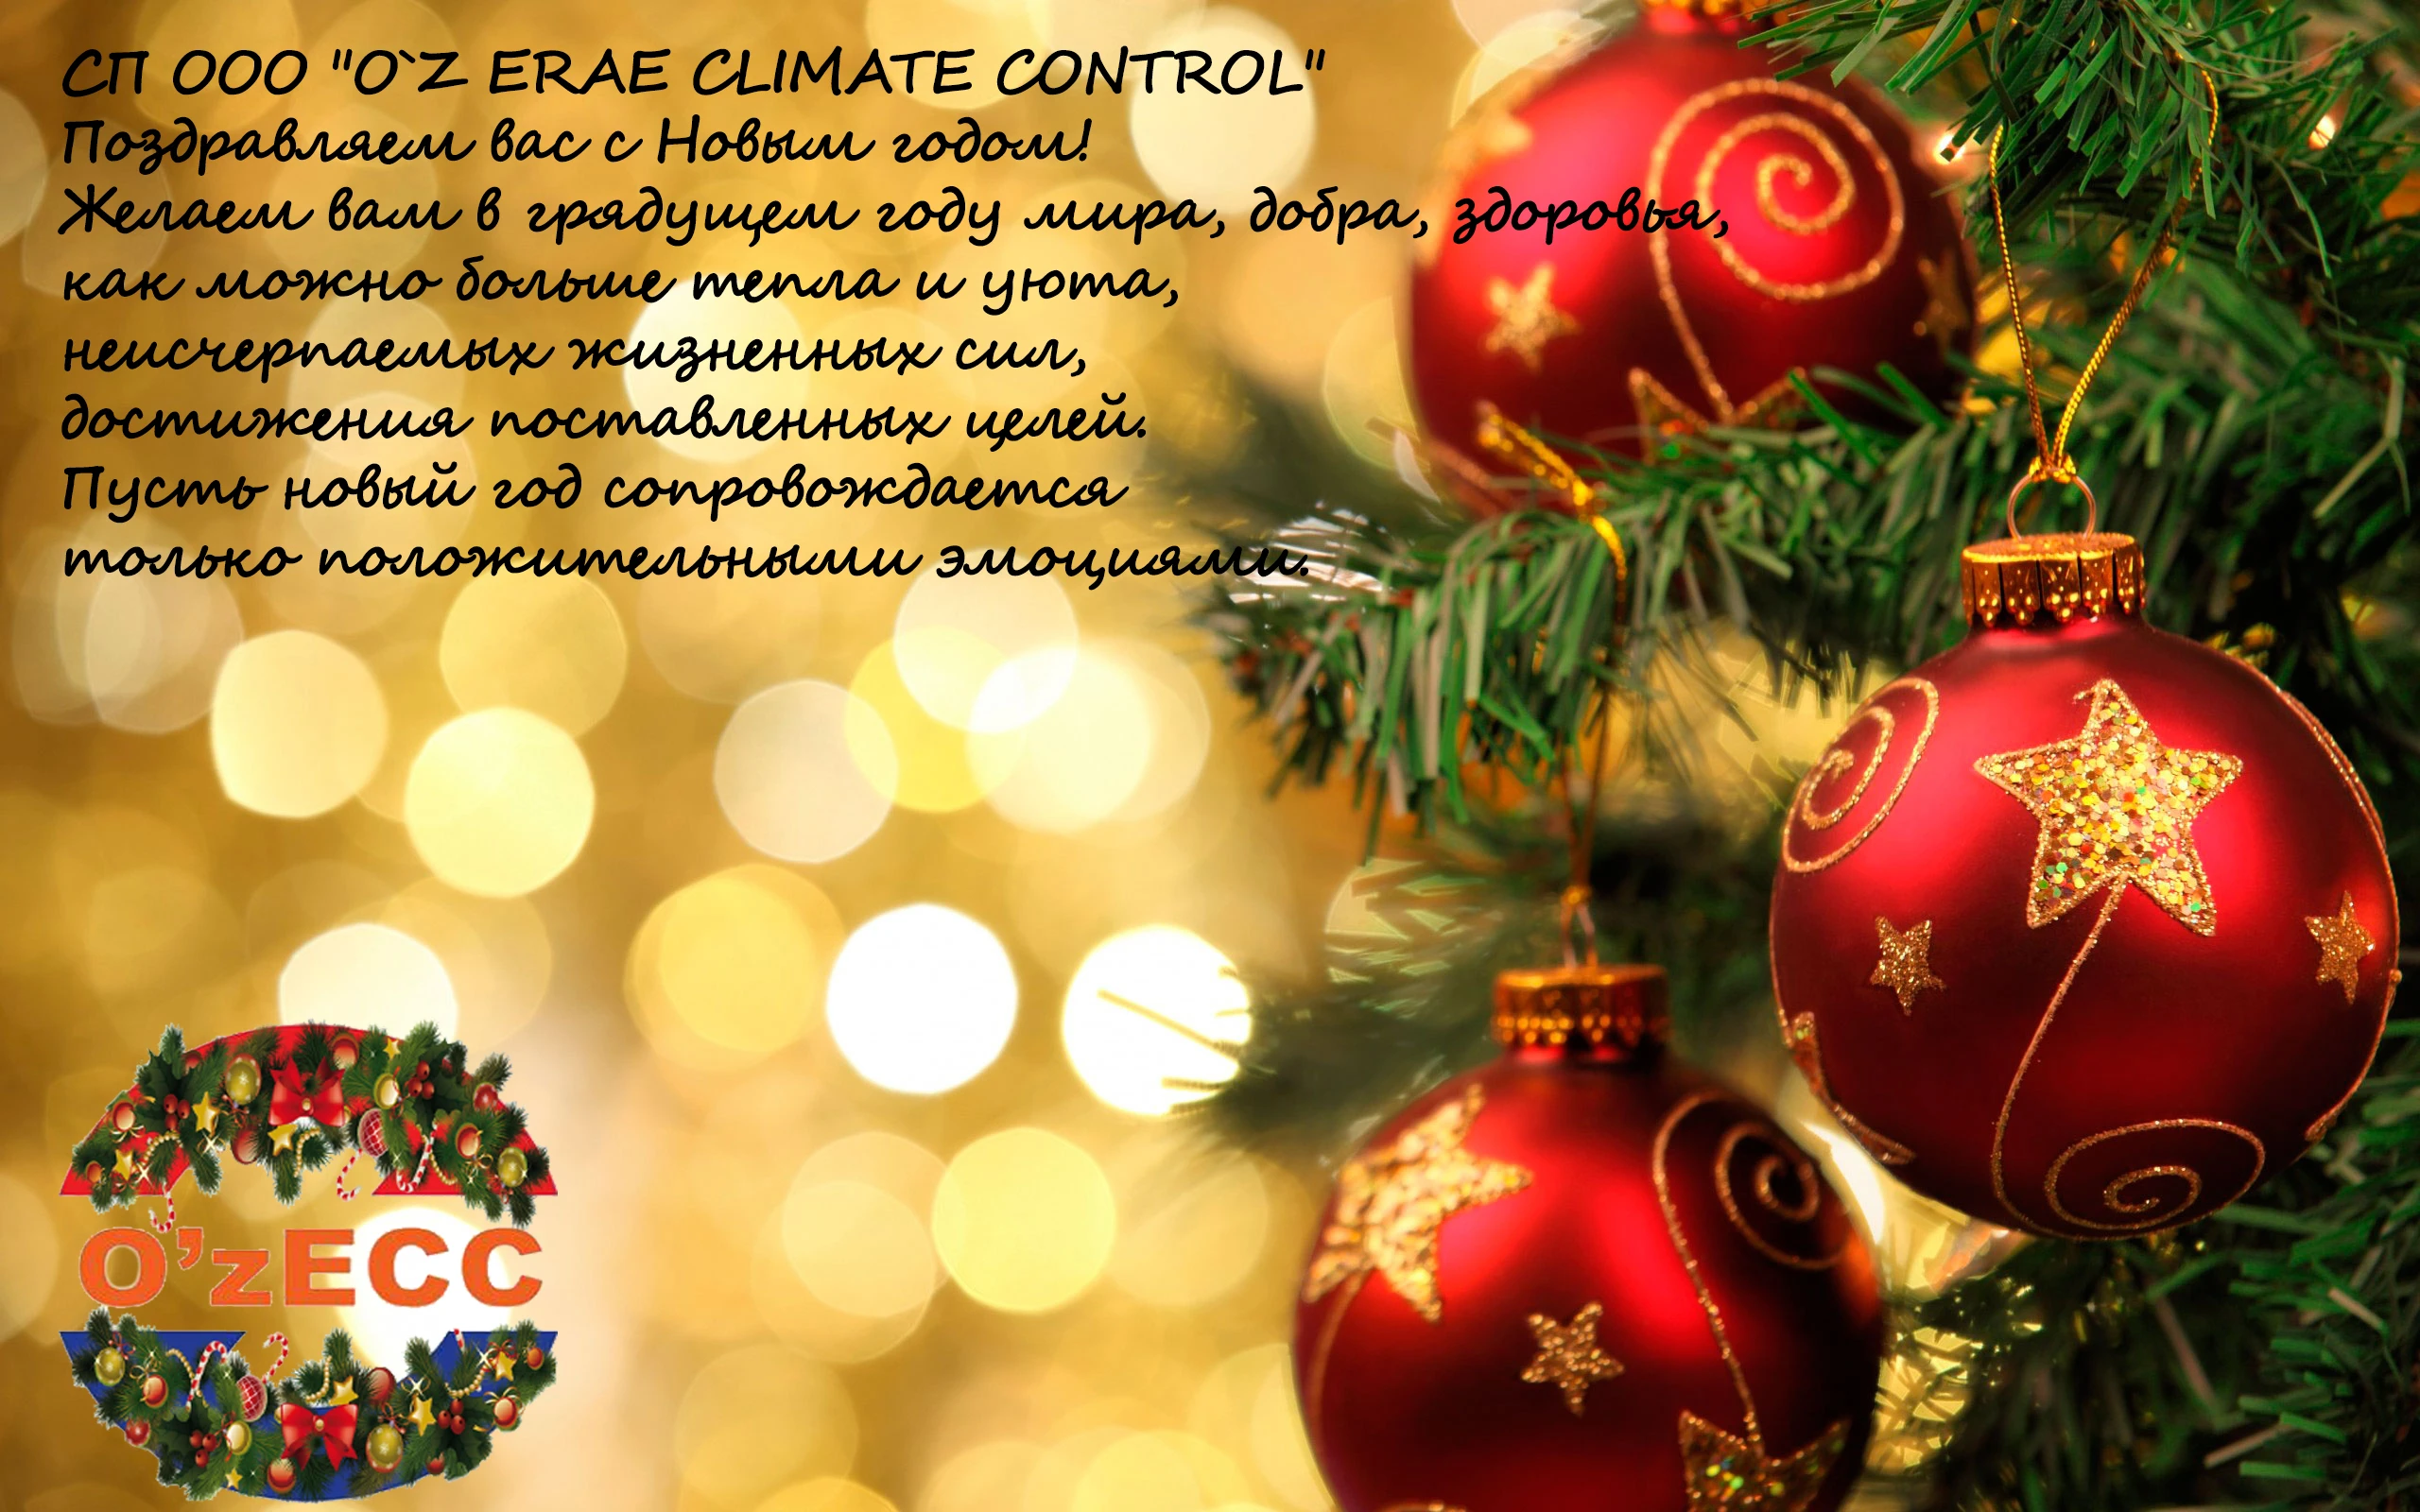 JV LLC "O'ZERA CLIMATE CONTROL" WISHES YOU A HAPPY NEW YEAR!